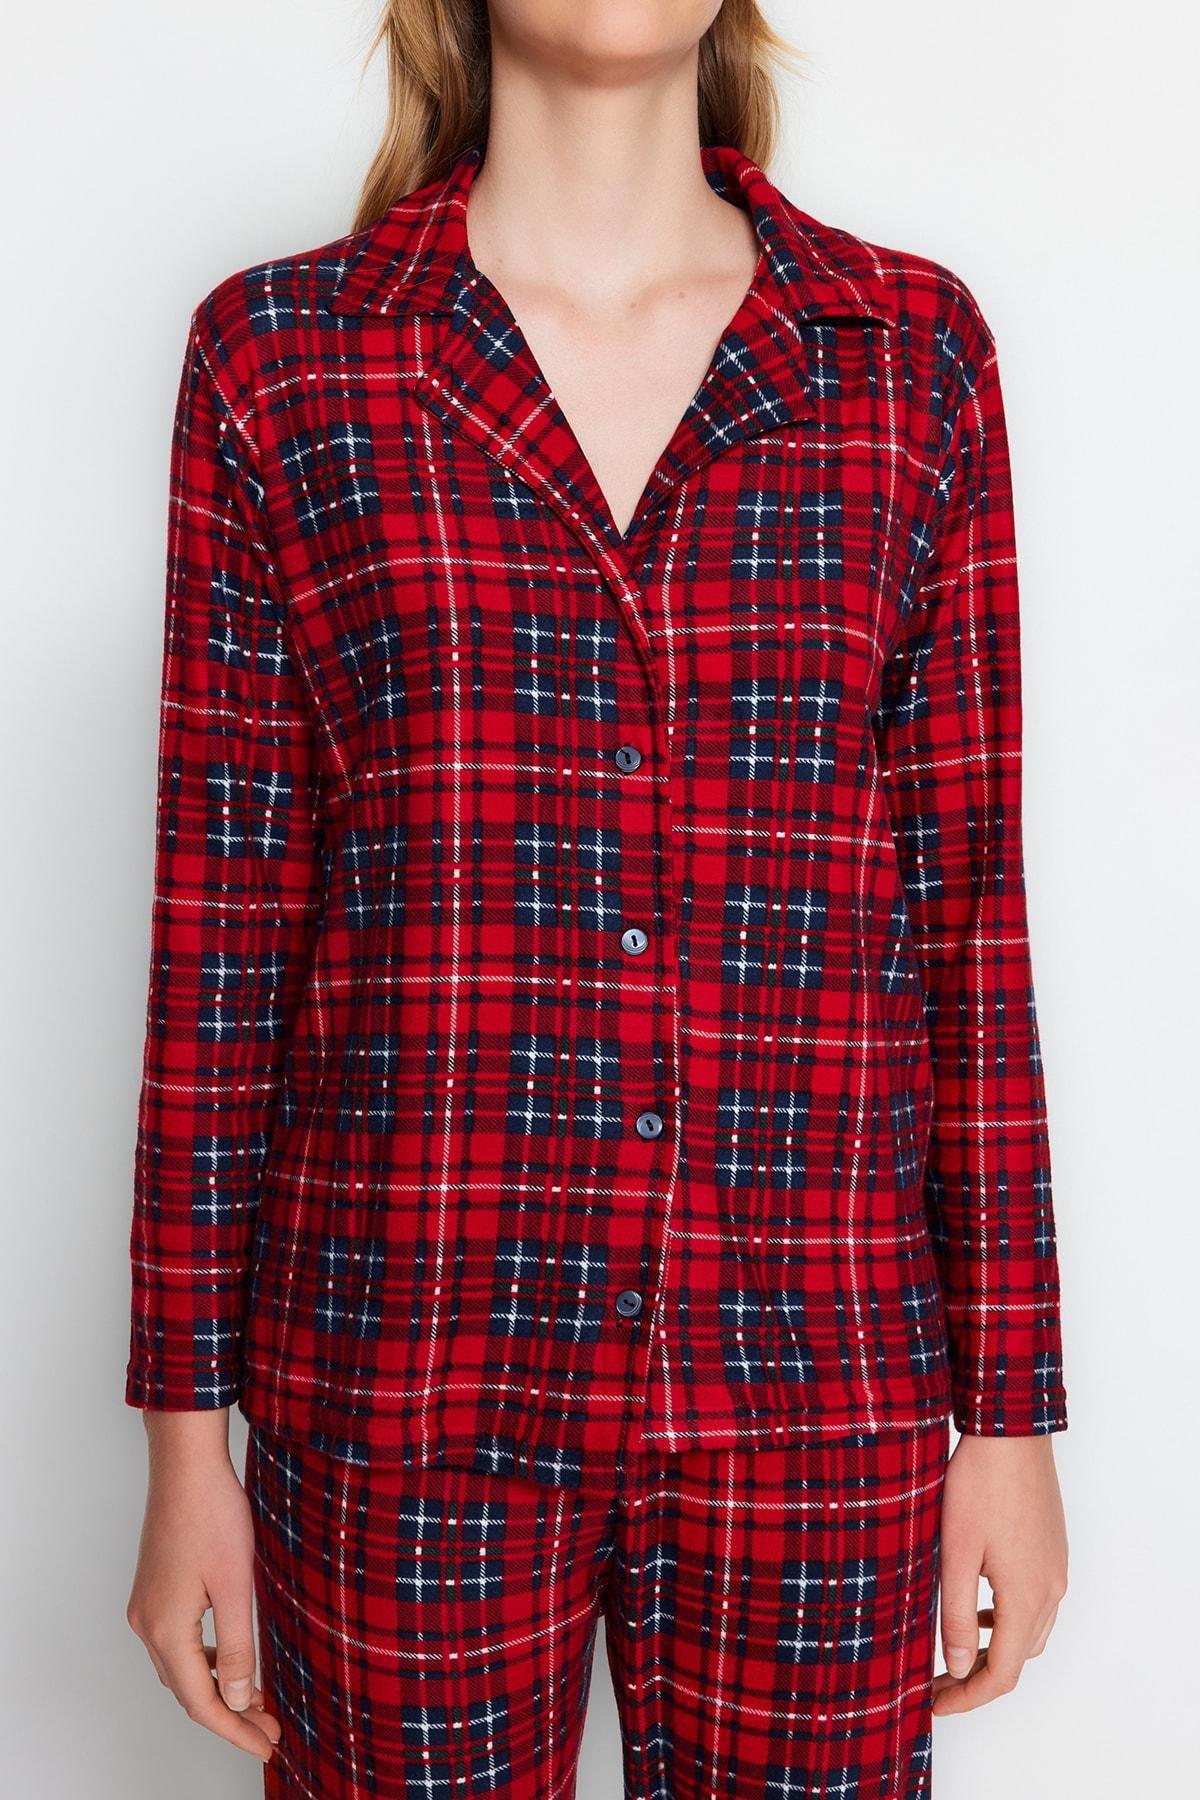 Trendyol - Red Checkered Knitted Pyjamas Set